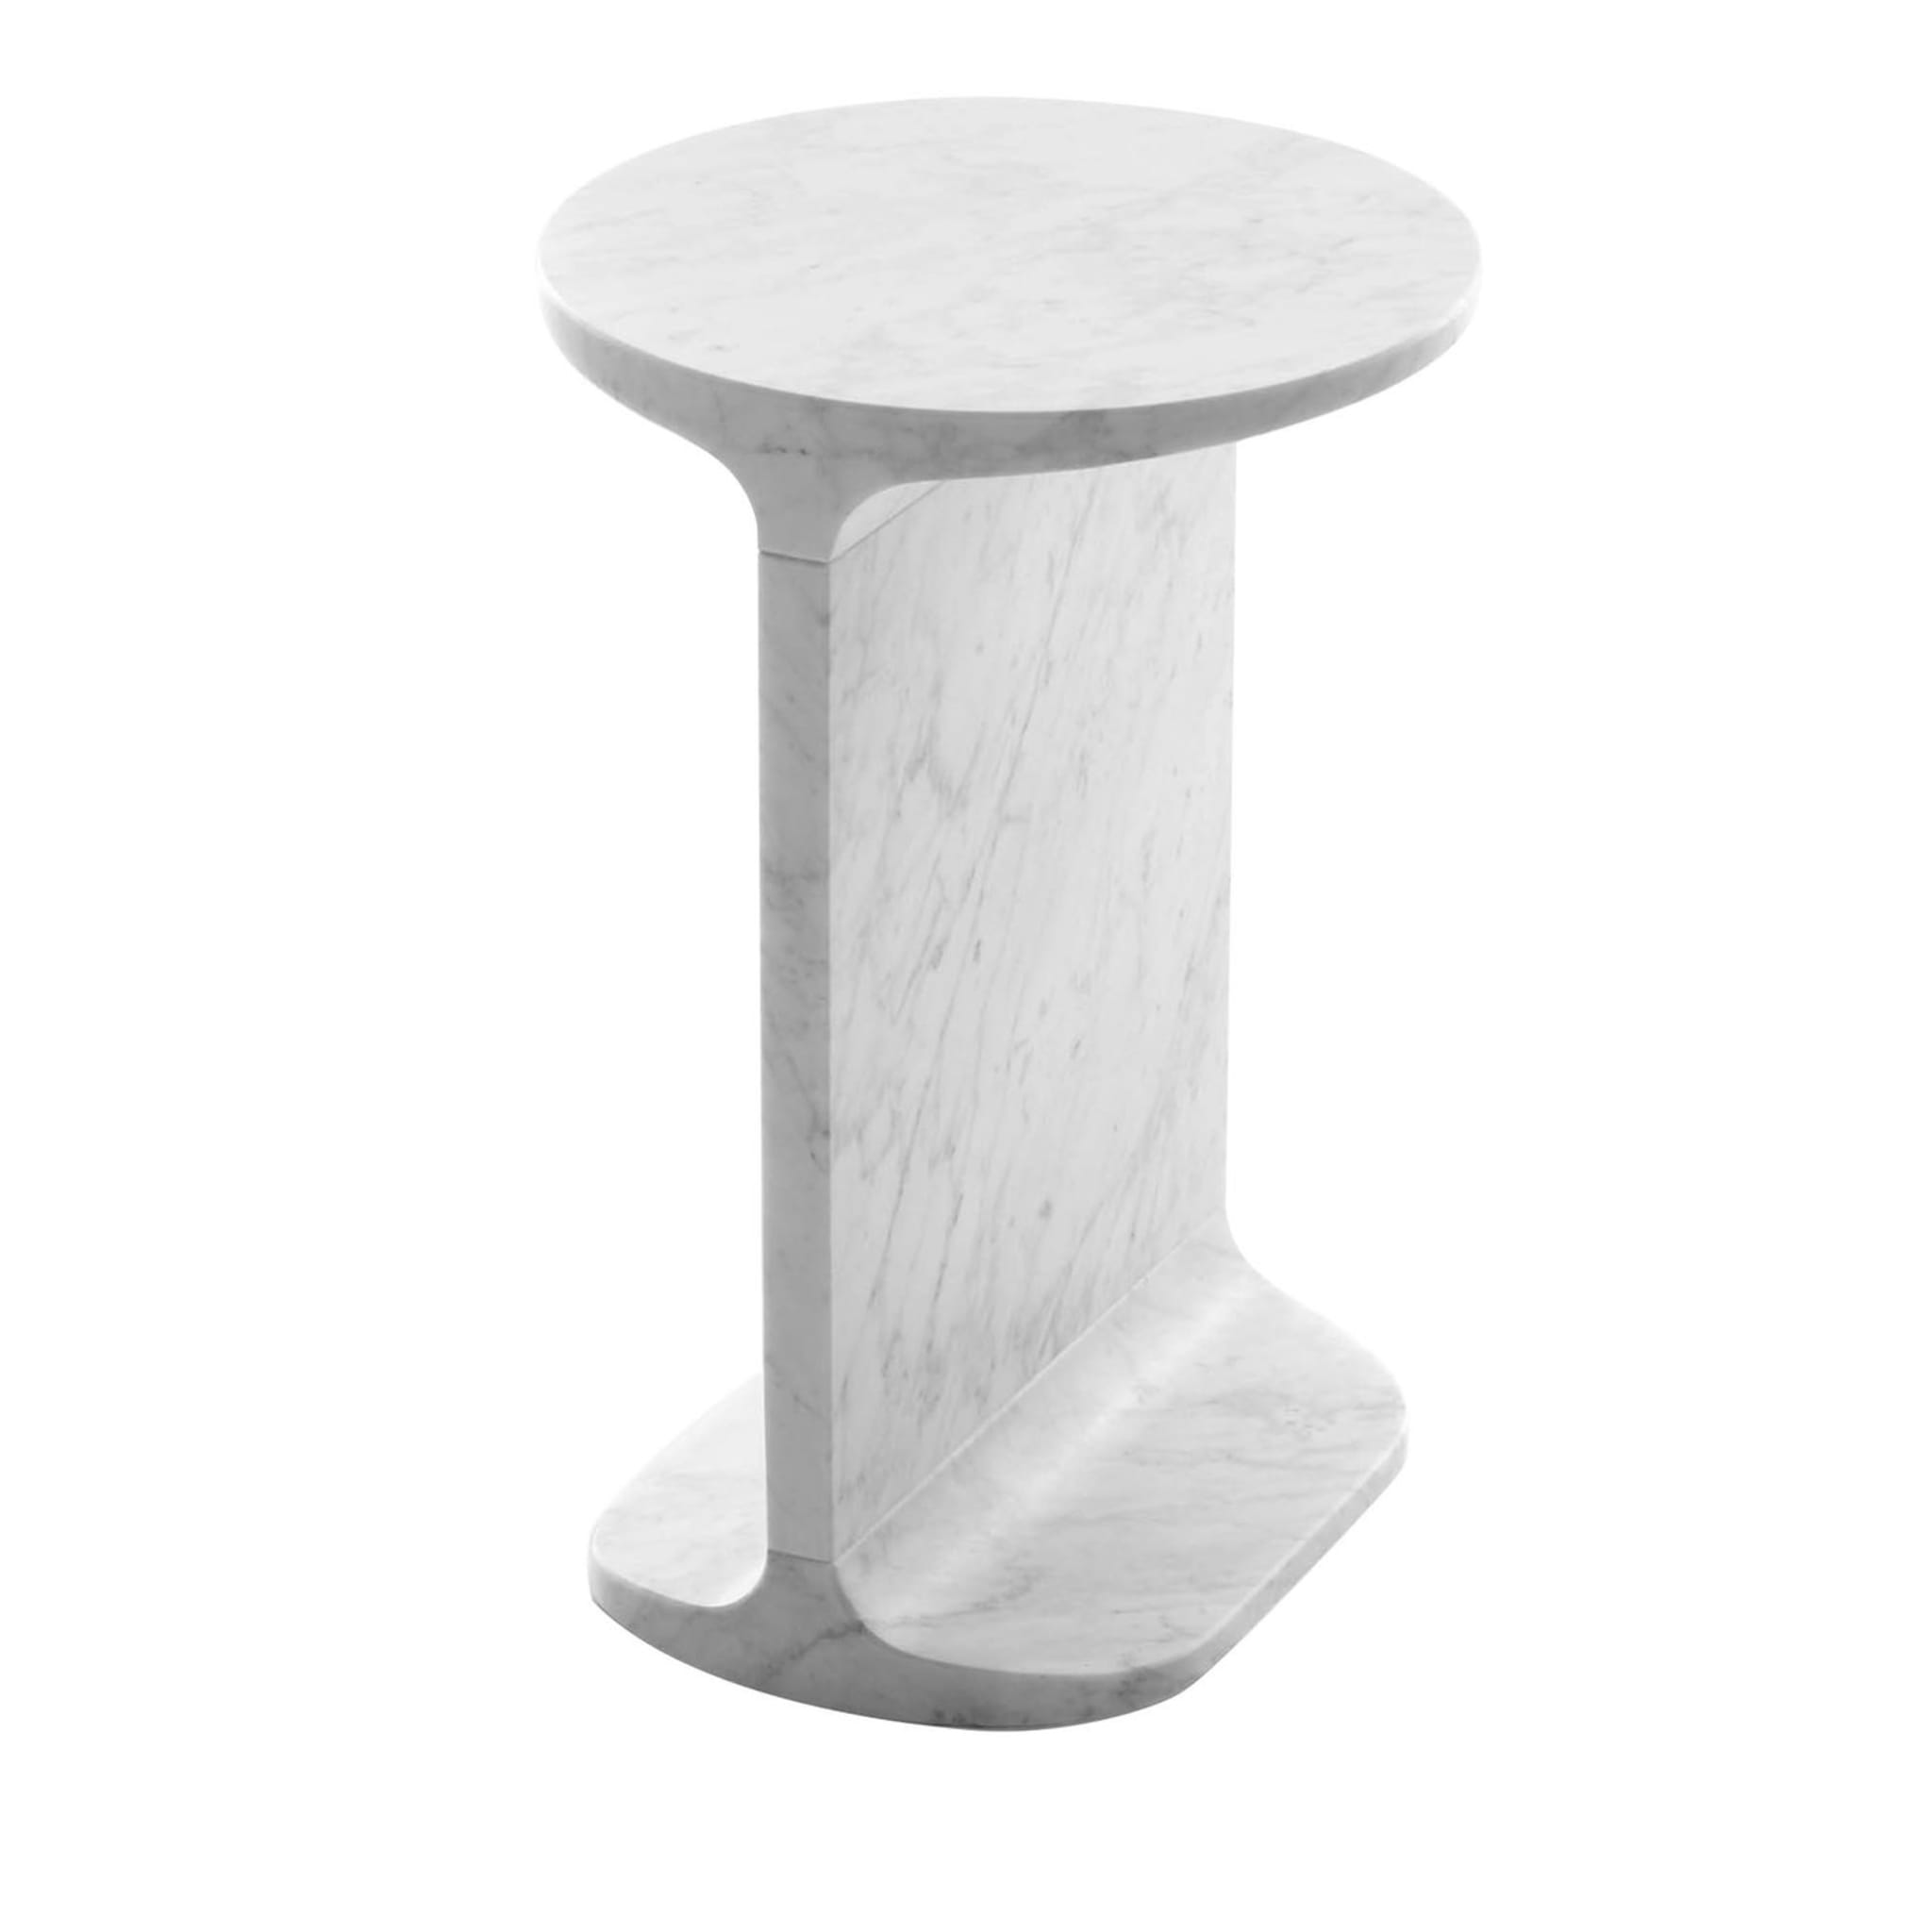 White IPE TONDO SIDE TABLE - Design James Irvine 2009 - Main view